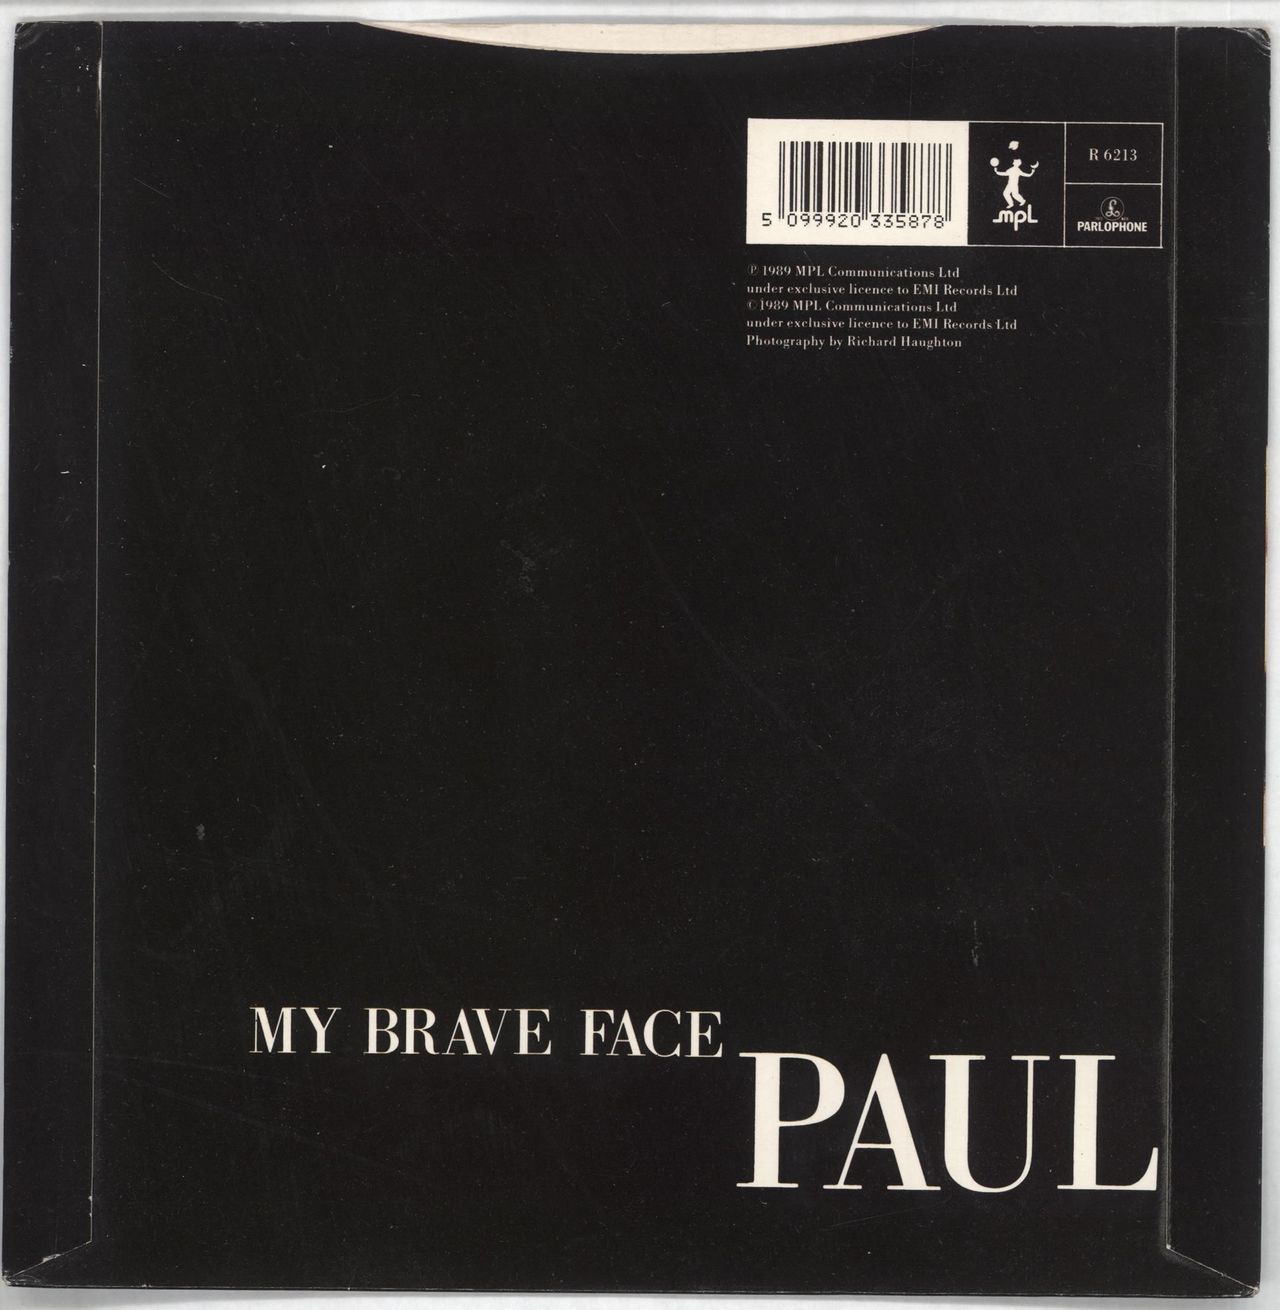 Paul McCartney and Wings My Brave Face - Black label UK 7 vinyl —  RareVinyl.com